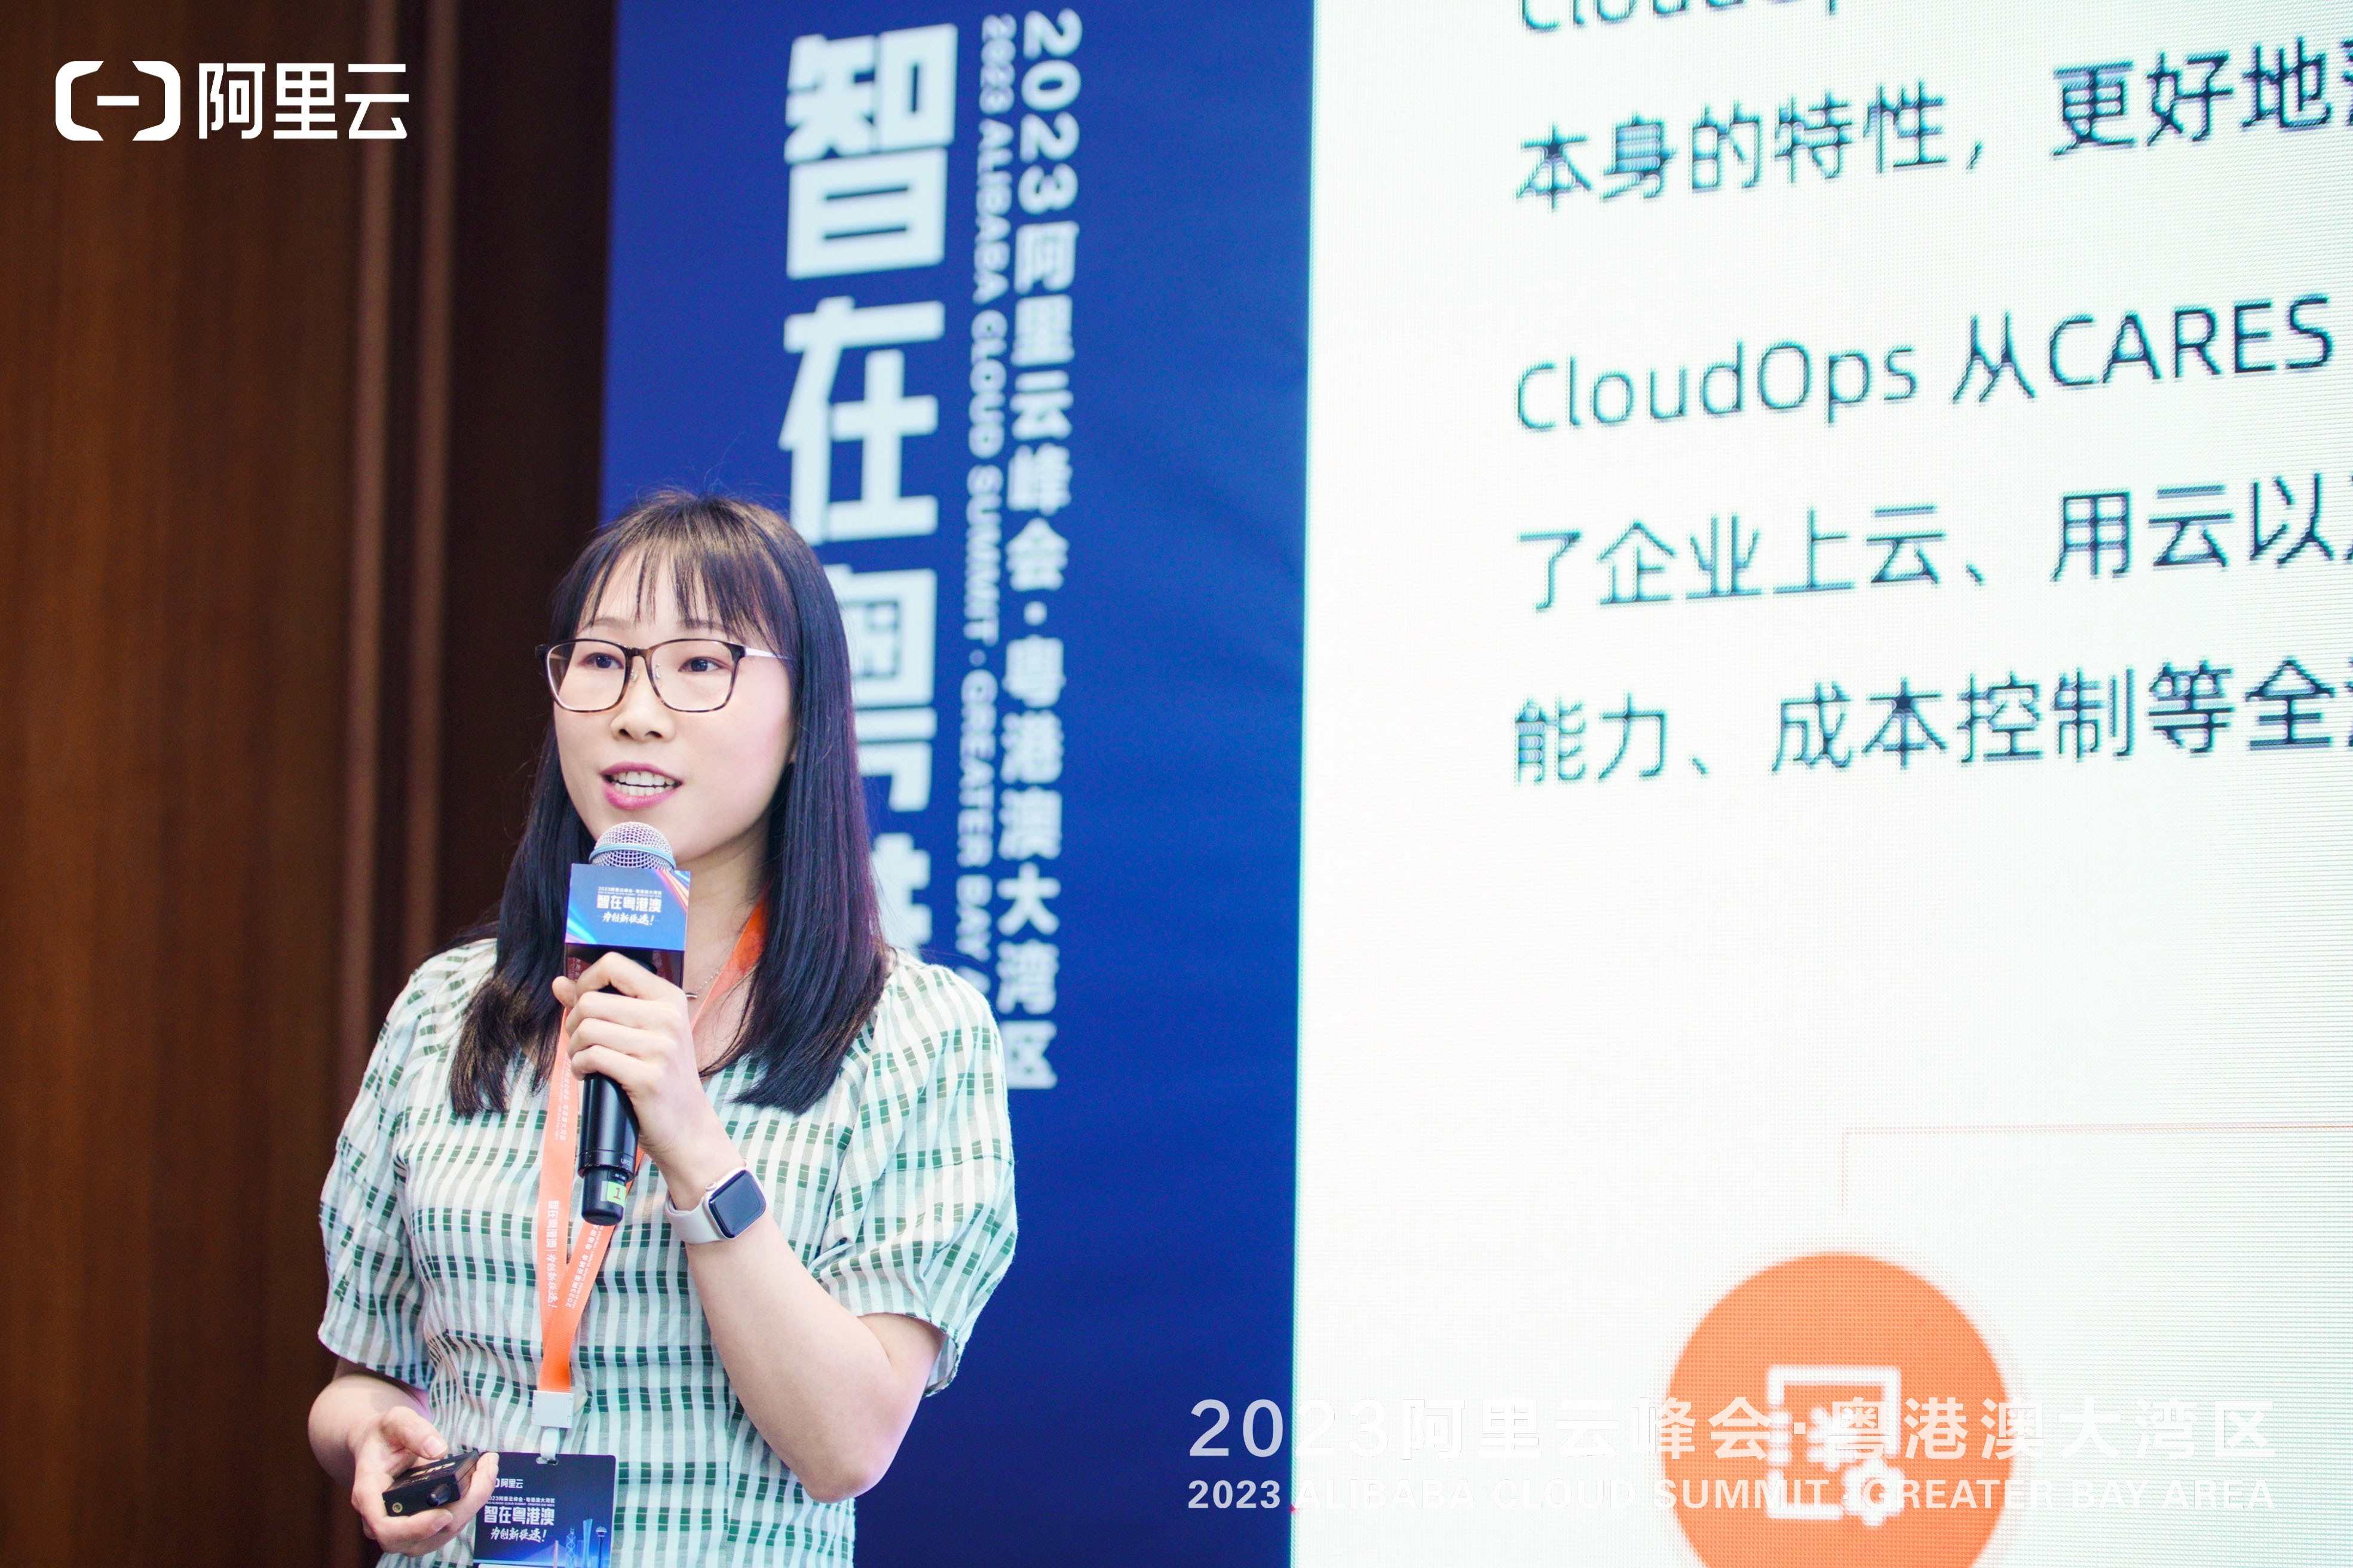 CloudOps自动化运维套件助力企业更好上云、用云、管云